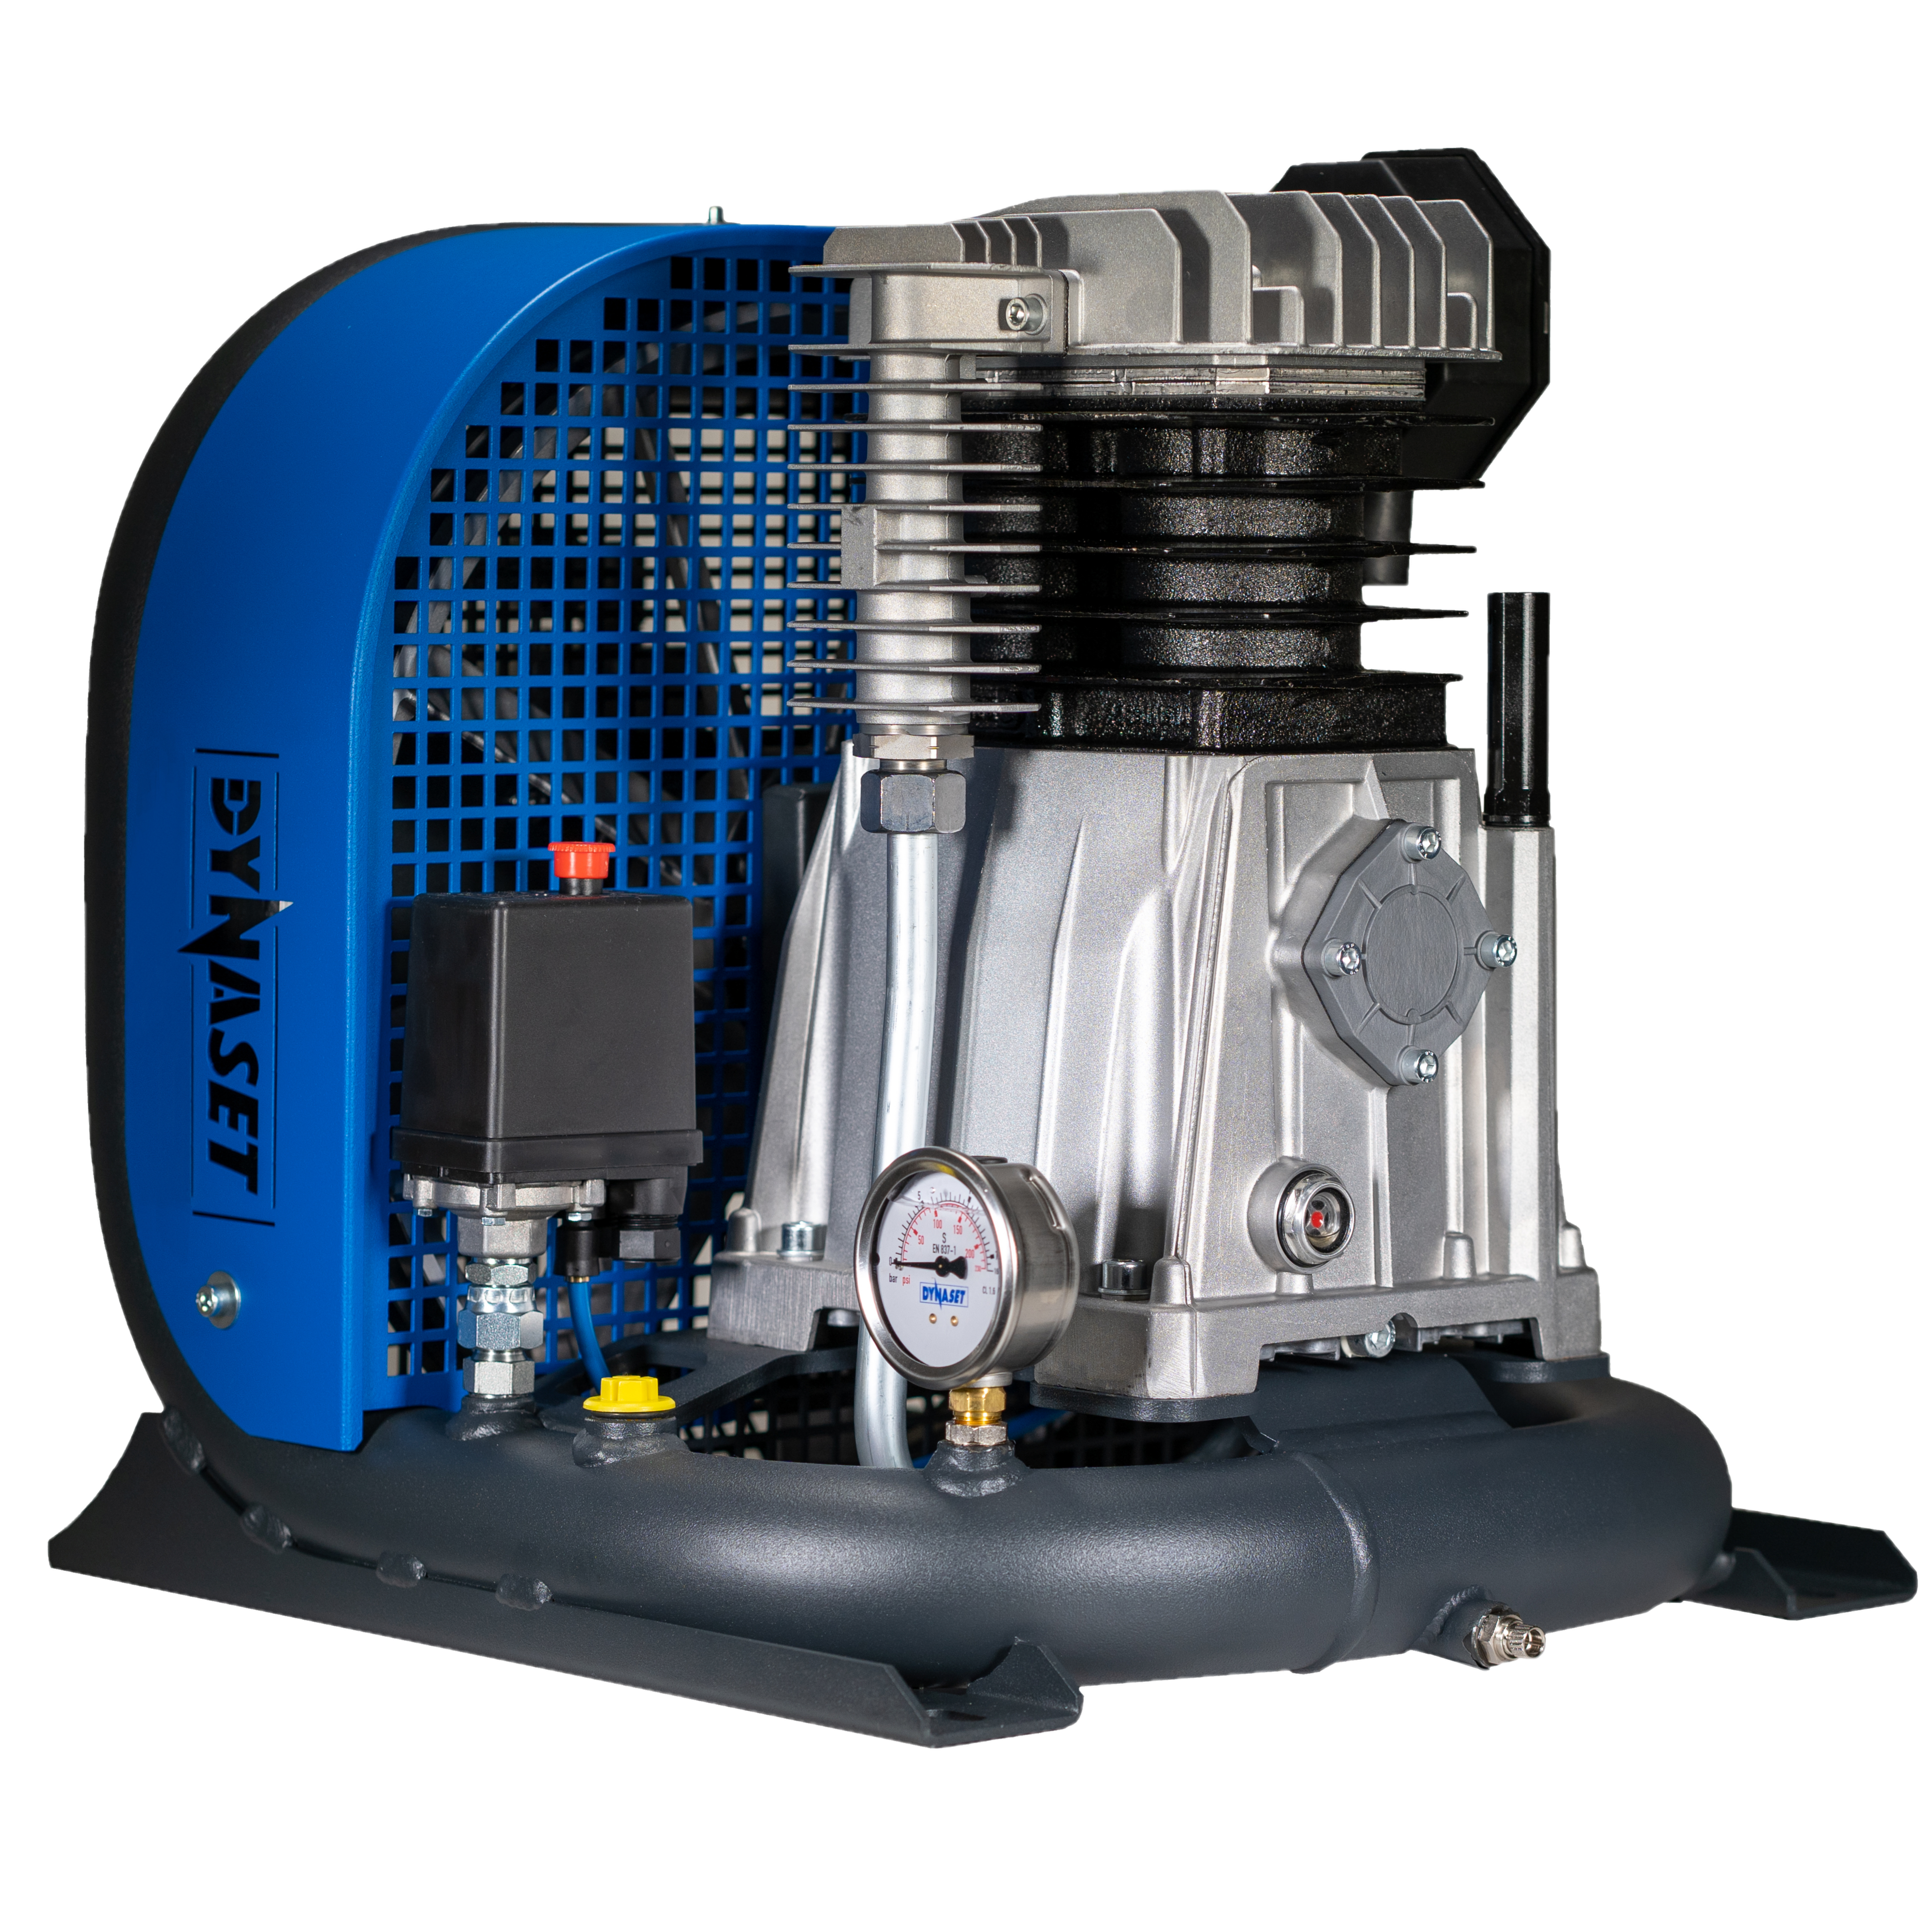 HK450 - Hydraulisch angetriebener Druckluft-Kolbenkompressor 450 L/min bei max. 8 bar (116 PSI)